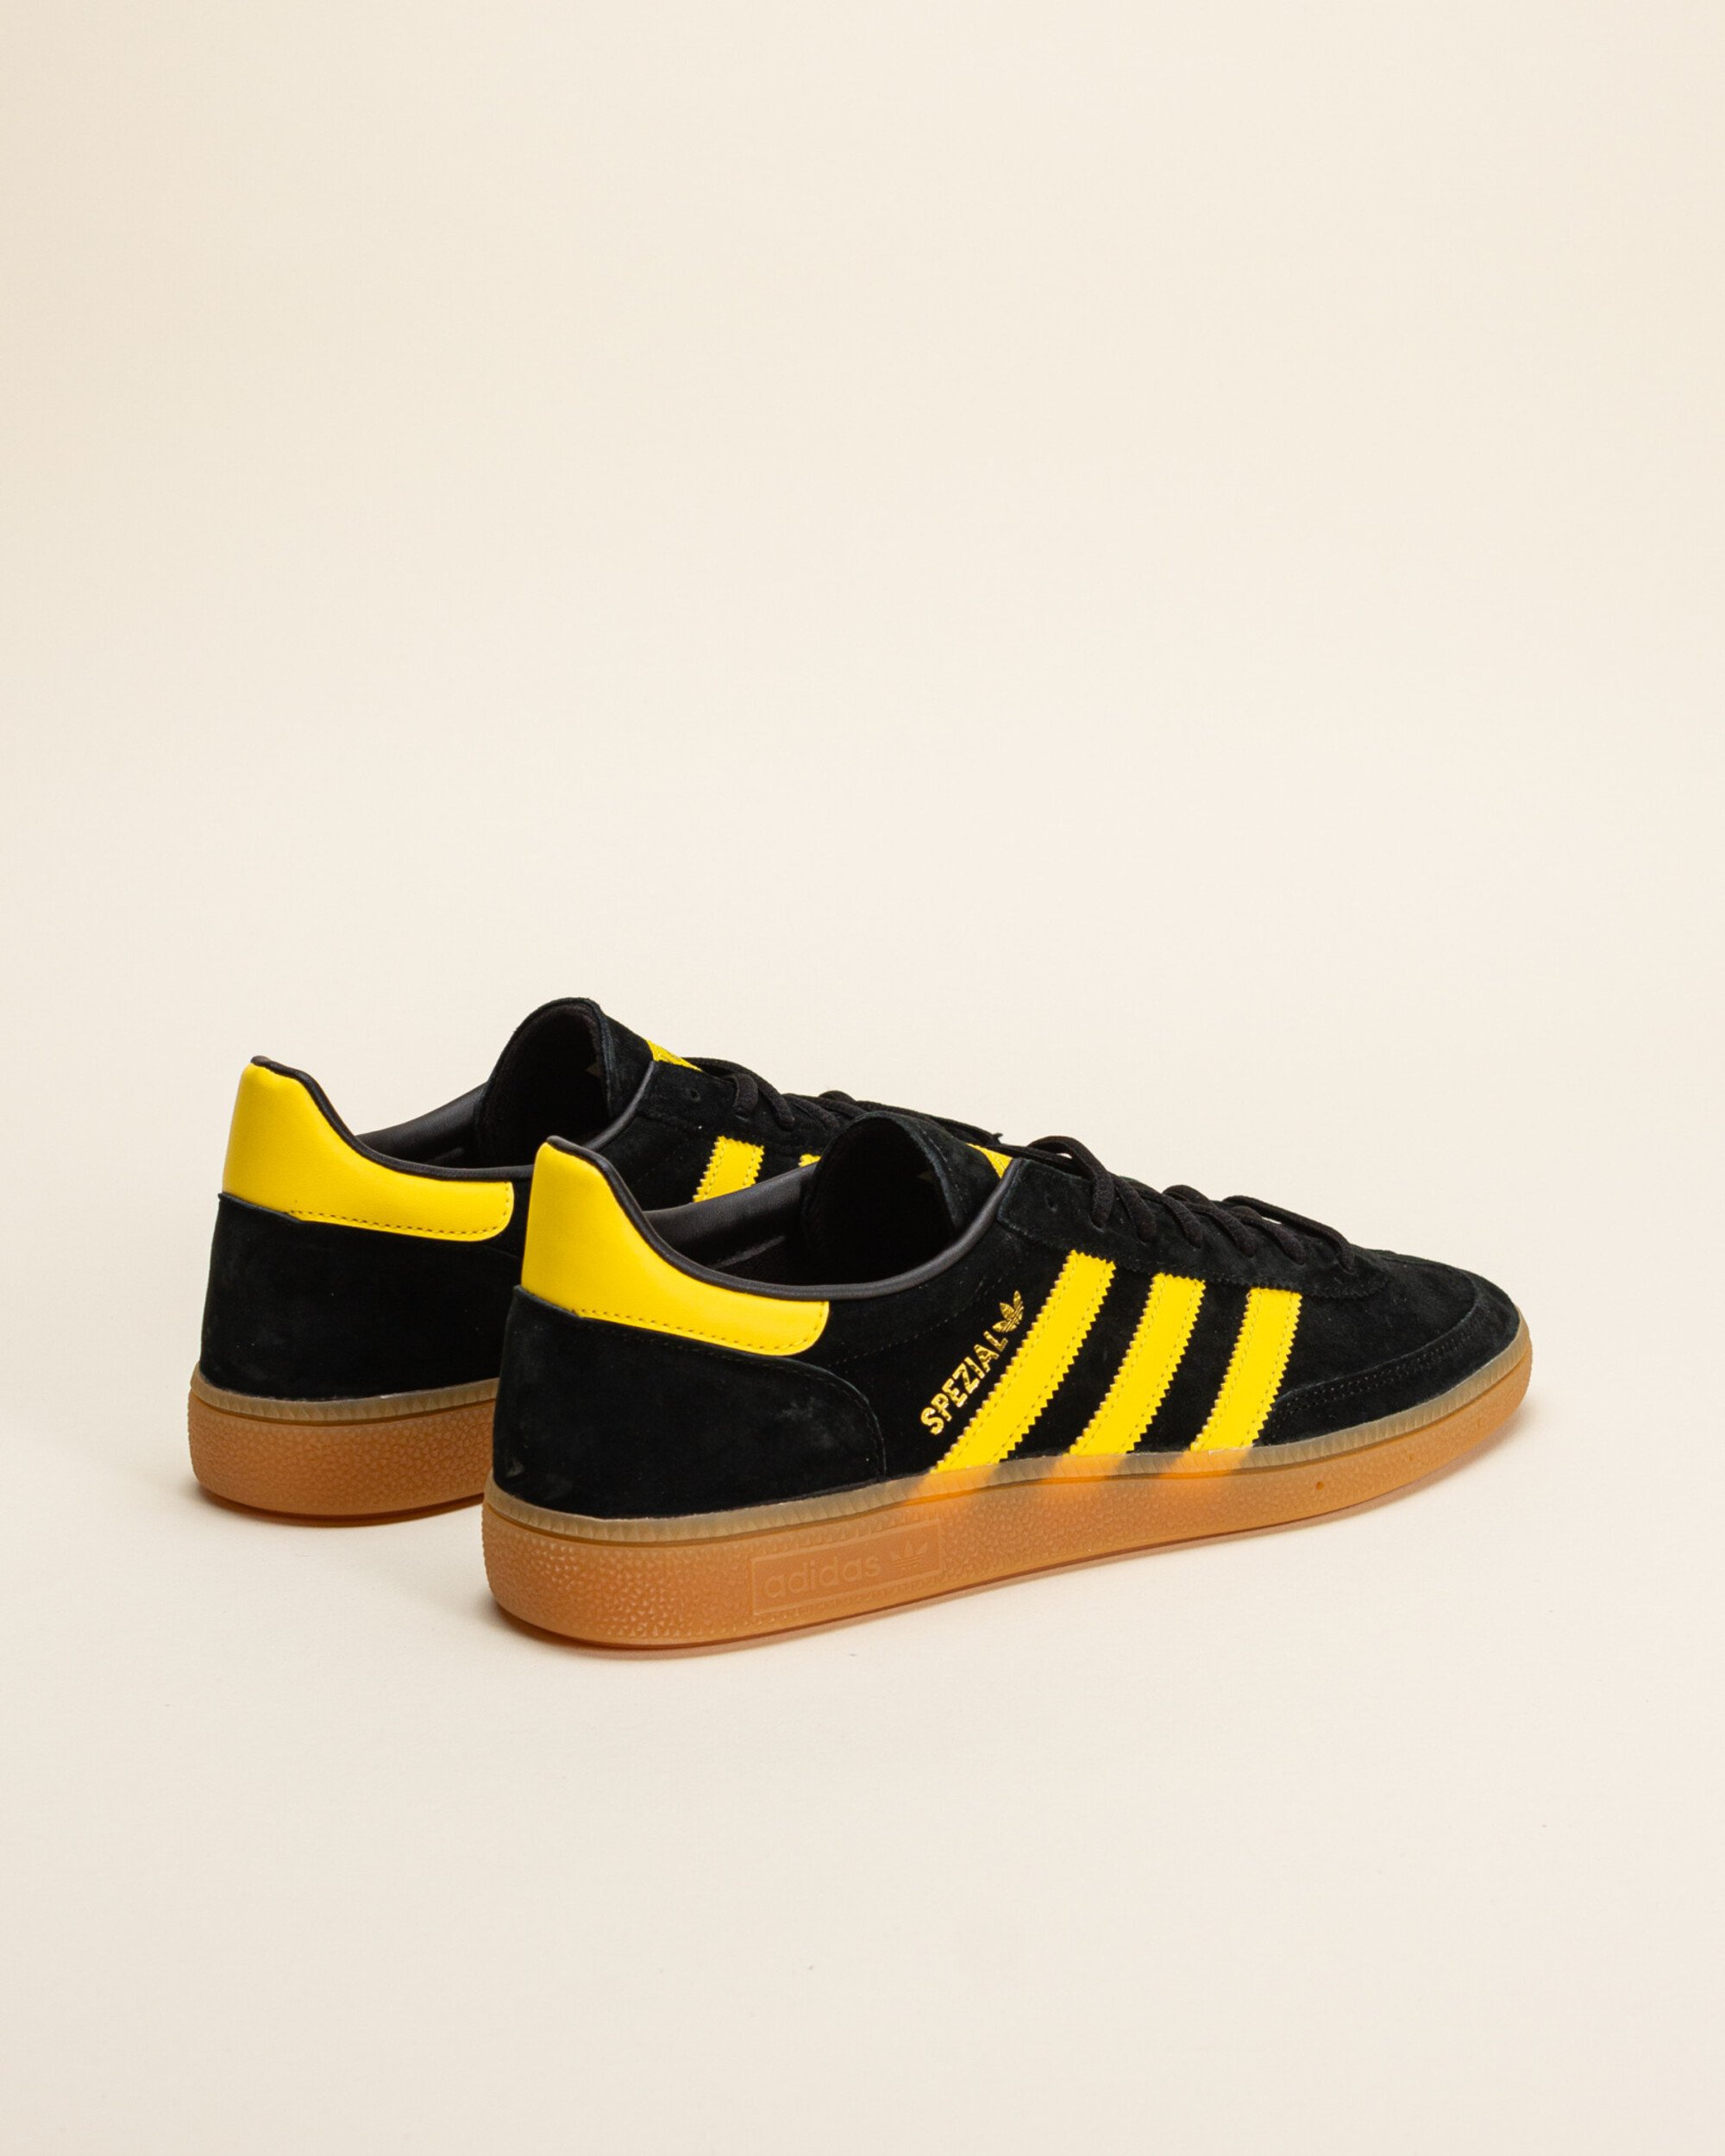 Adidas Handball Spezial - Core Black/Yellow/Gold Metallic